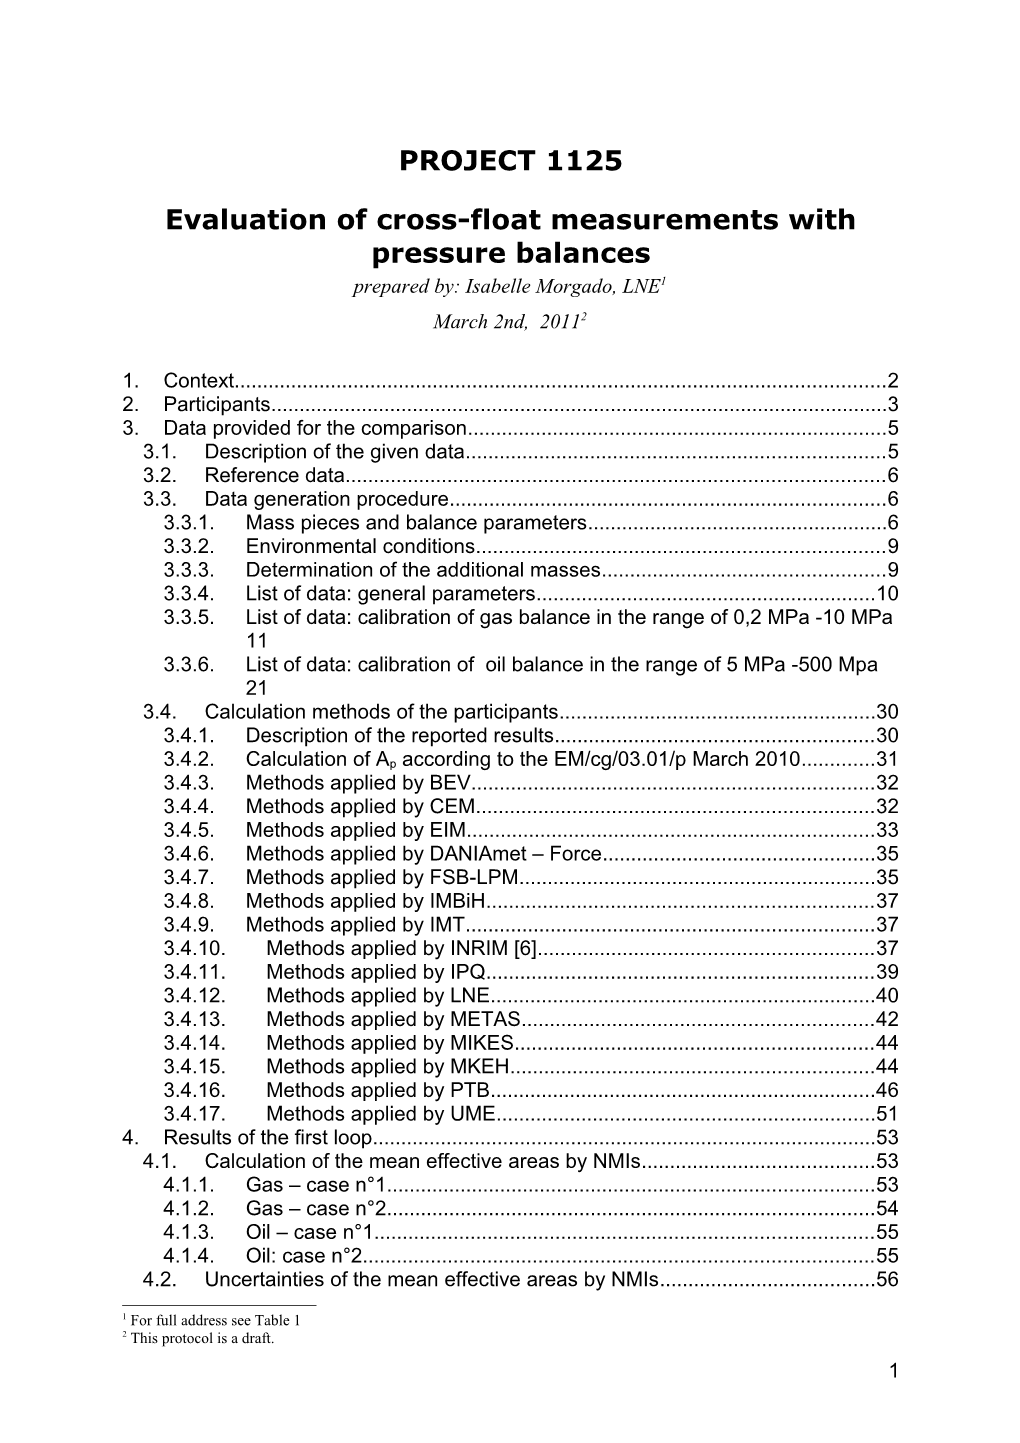 Evaluation of Cross-Float Measurements with Pressure Balances